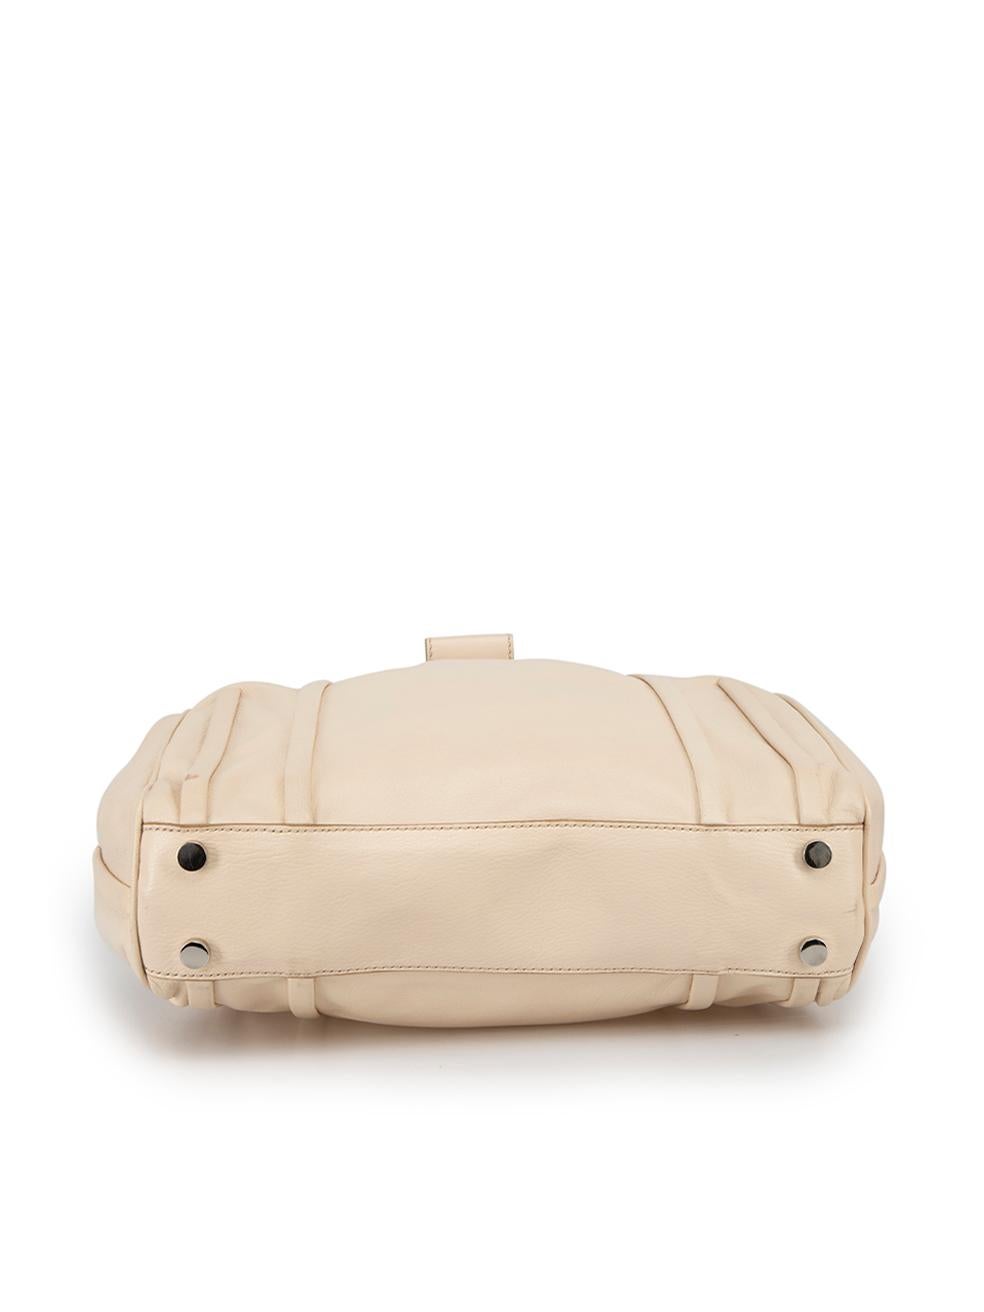 Céline Women's Cream Leather Large Tote Bag 1